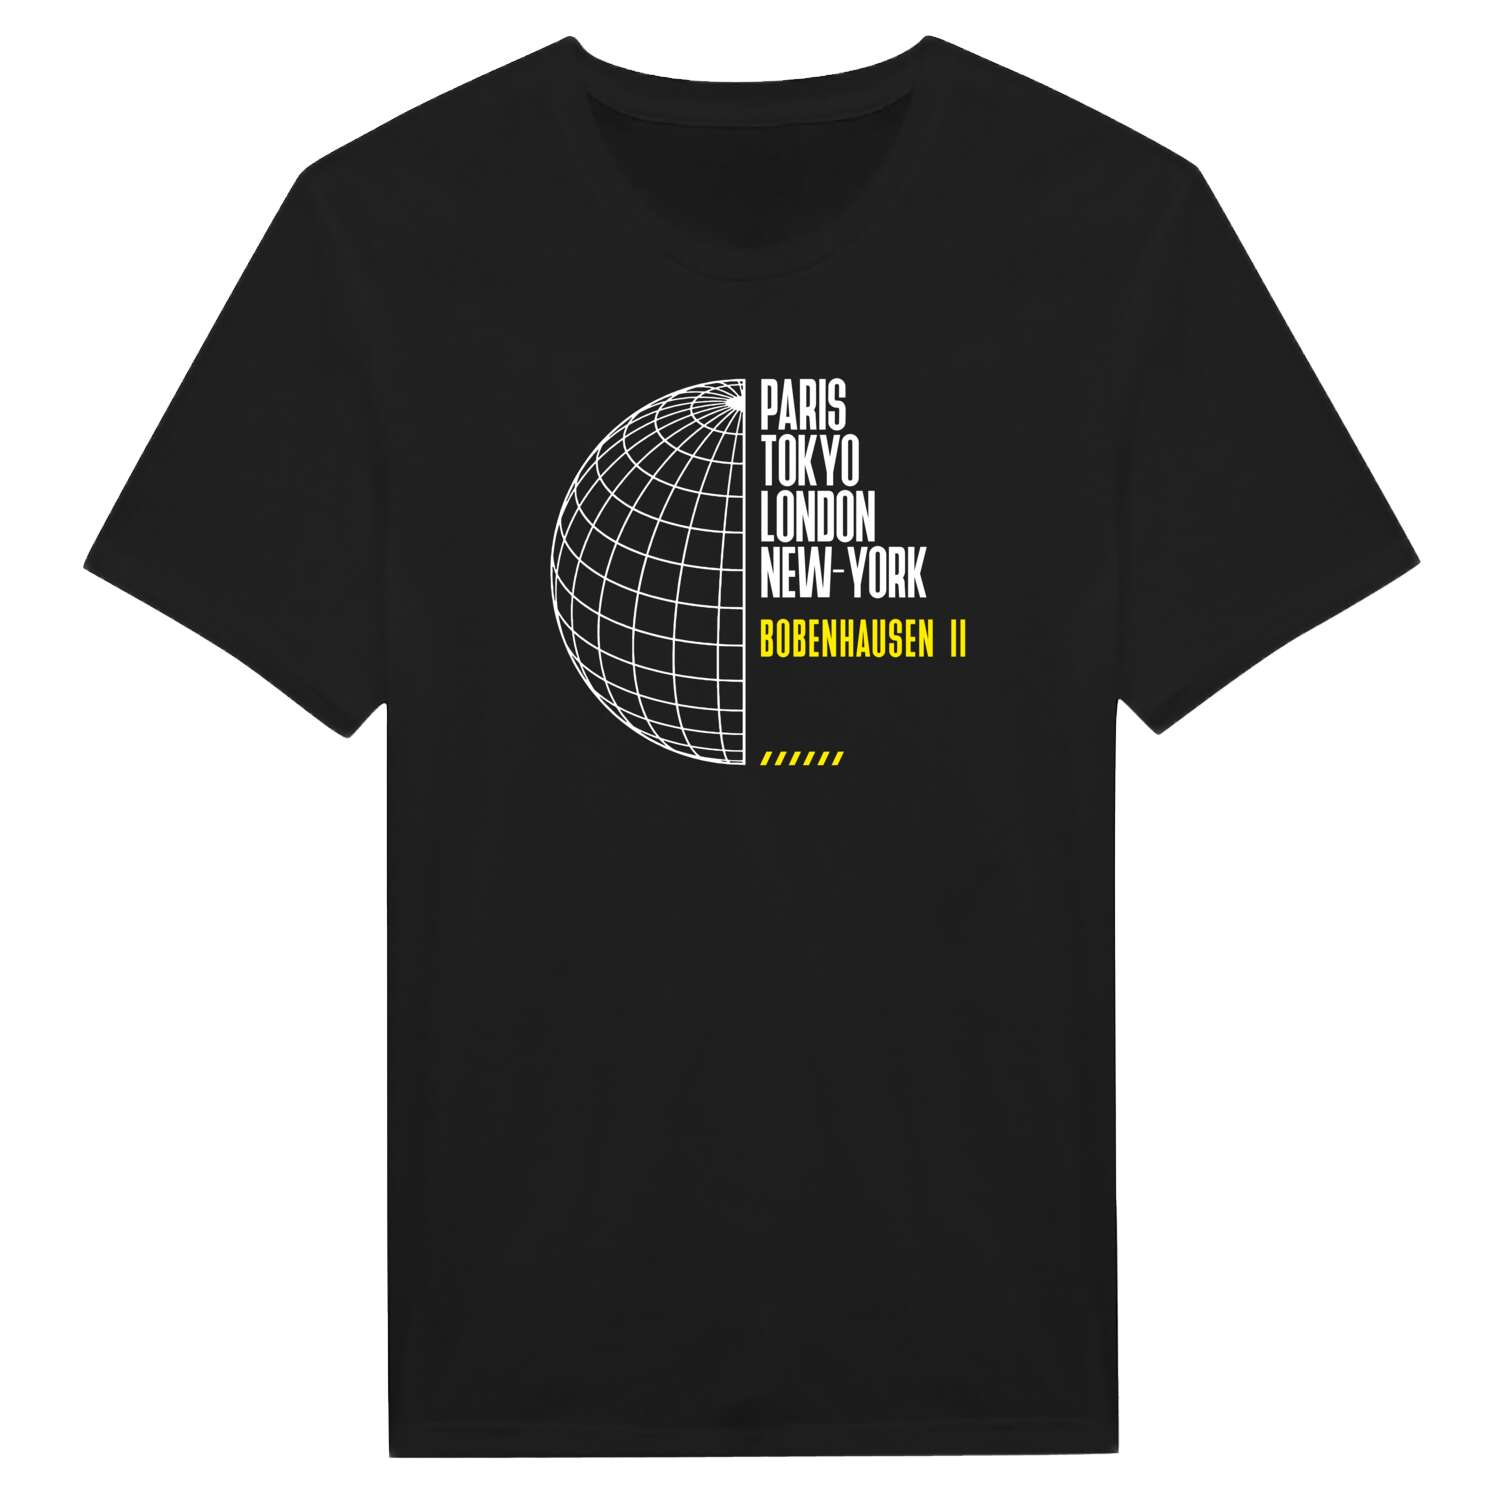 Bobenhausen II T-Shirt »Paris Tokyo London«